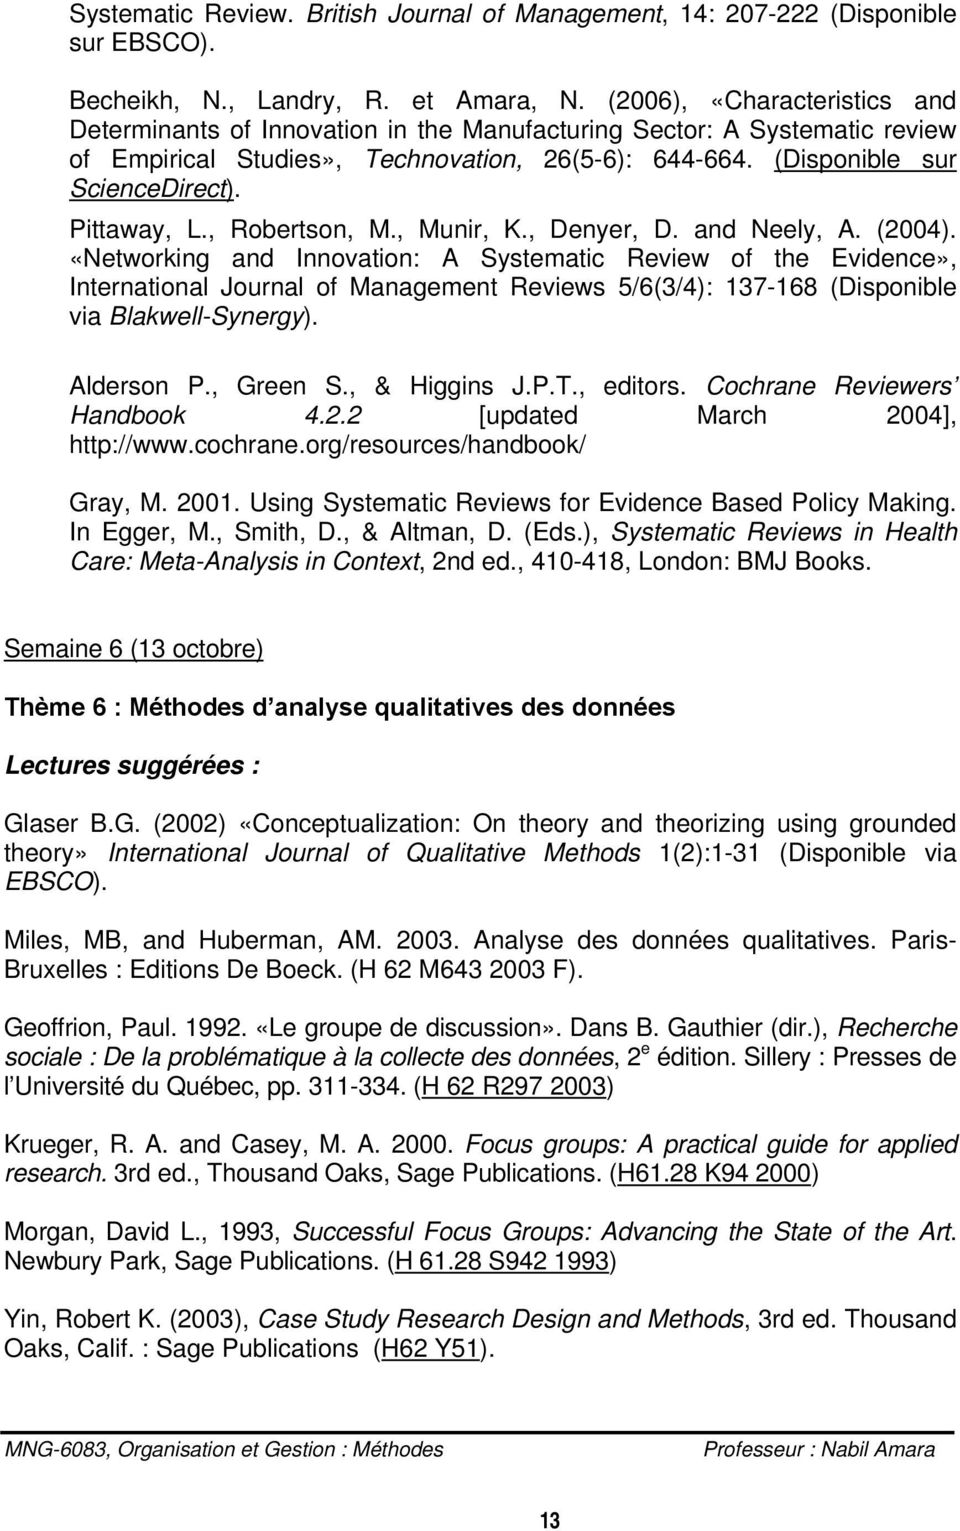 Pittaway, L., Robertson, M., Munir, K., Denyer, D. and Neely, A. (2004).